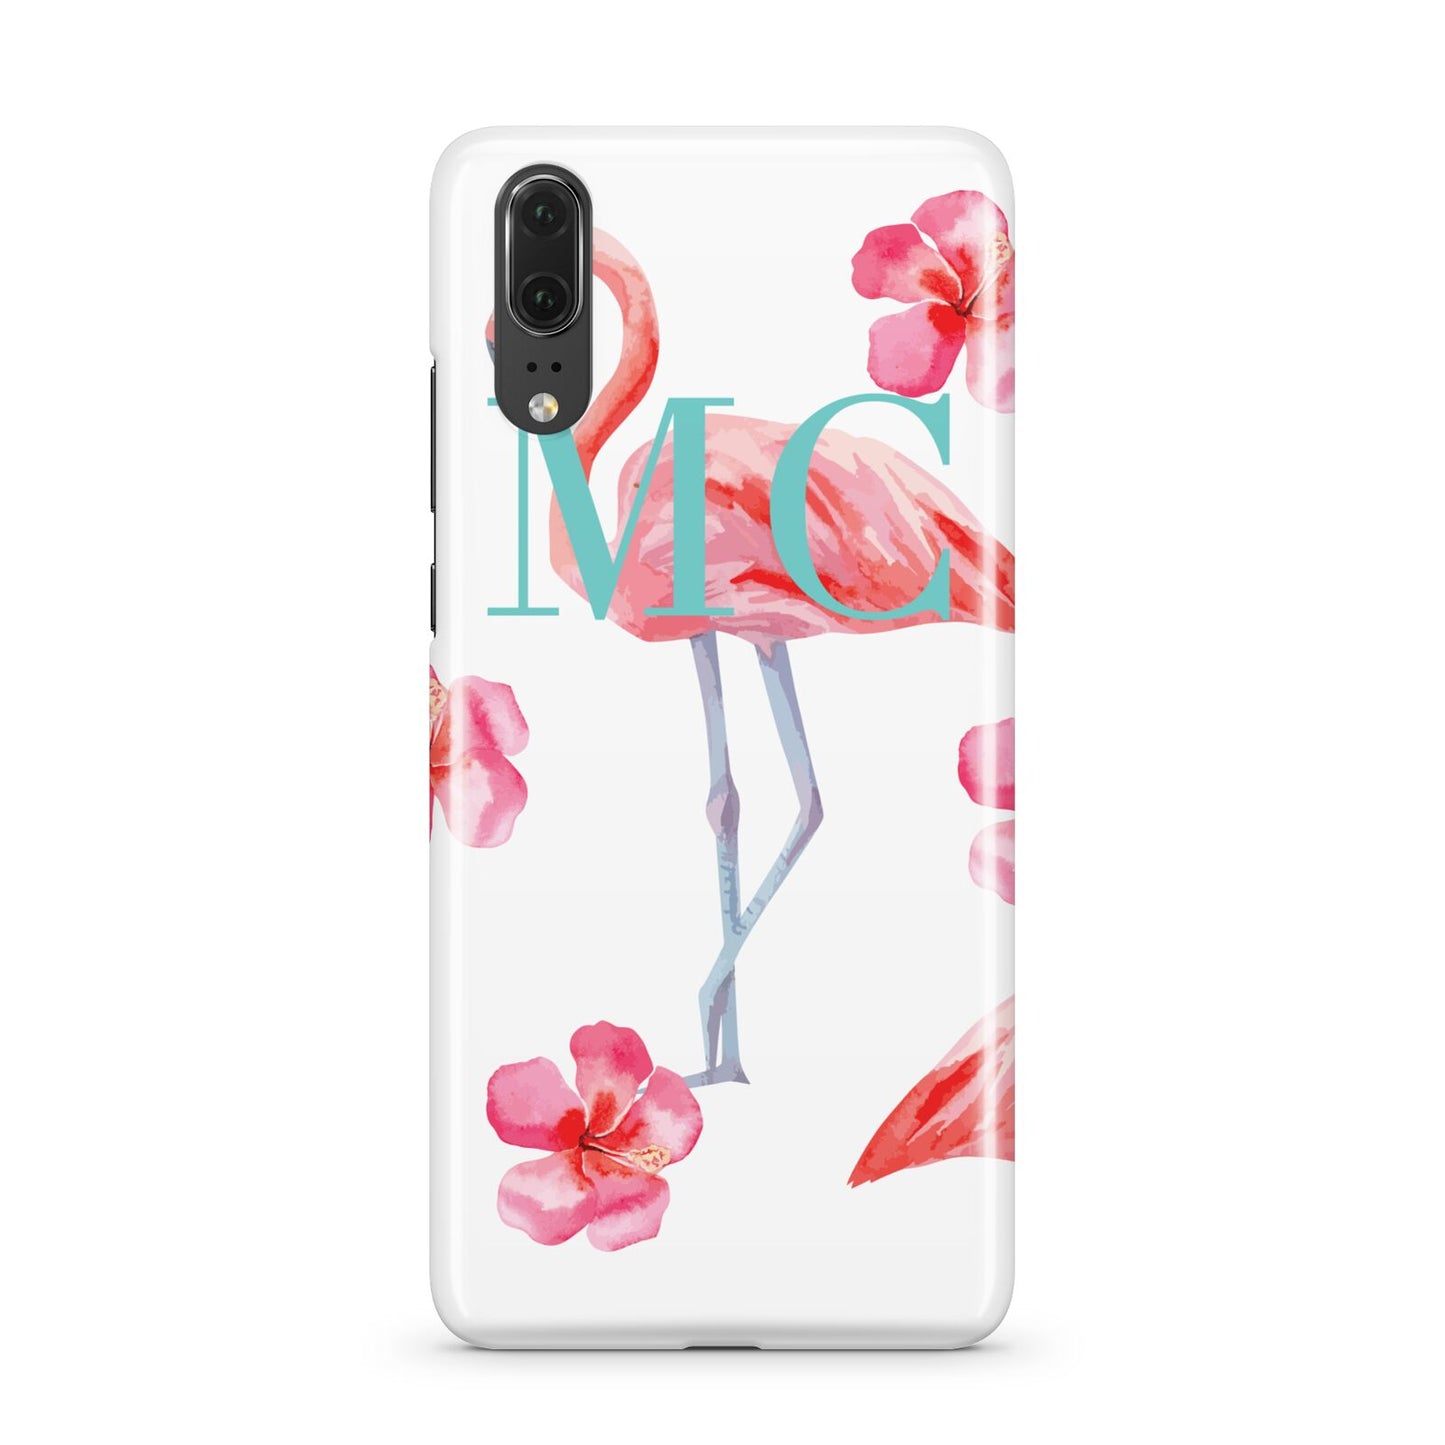 Personalised Initials Flamingo 3 Huawei P20 Phone Case